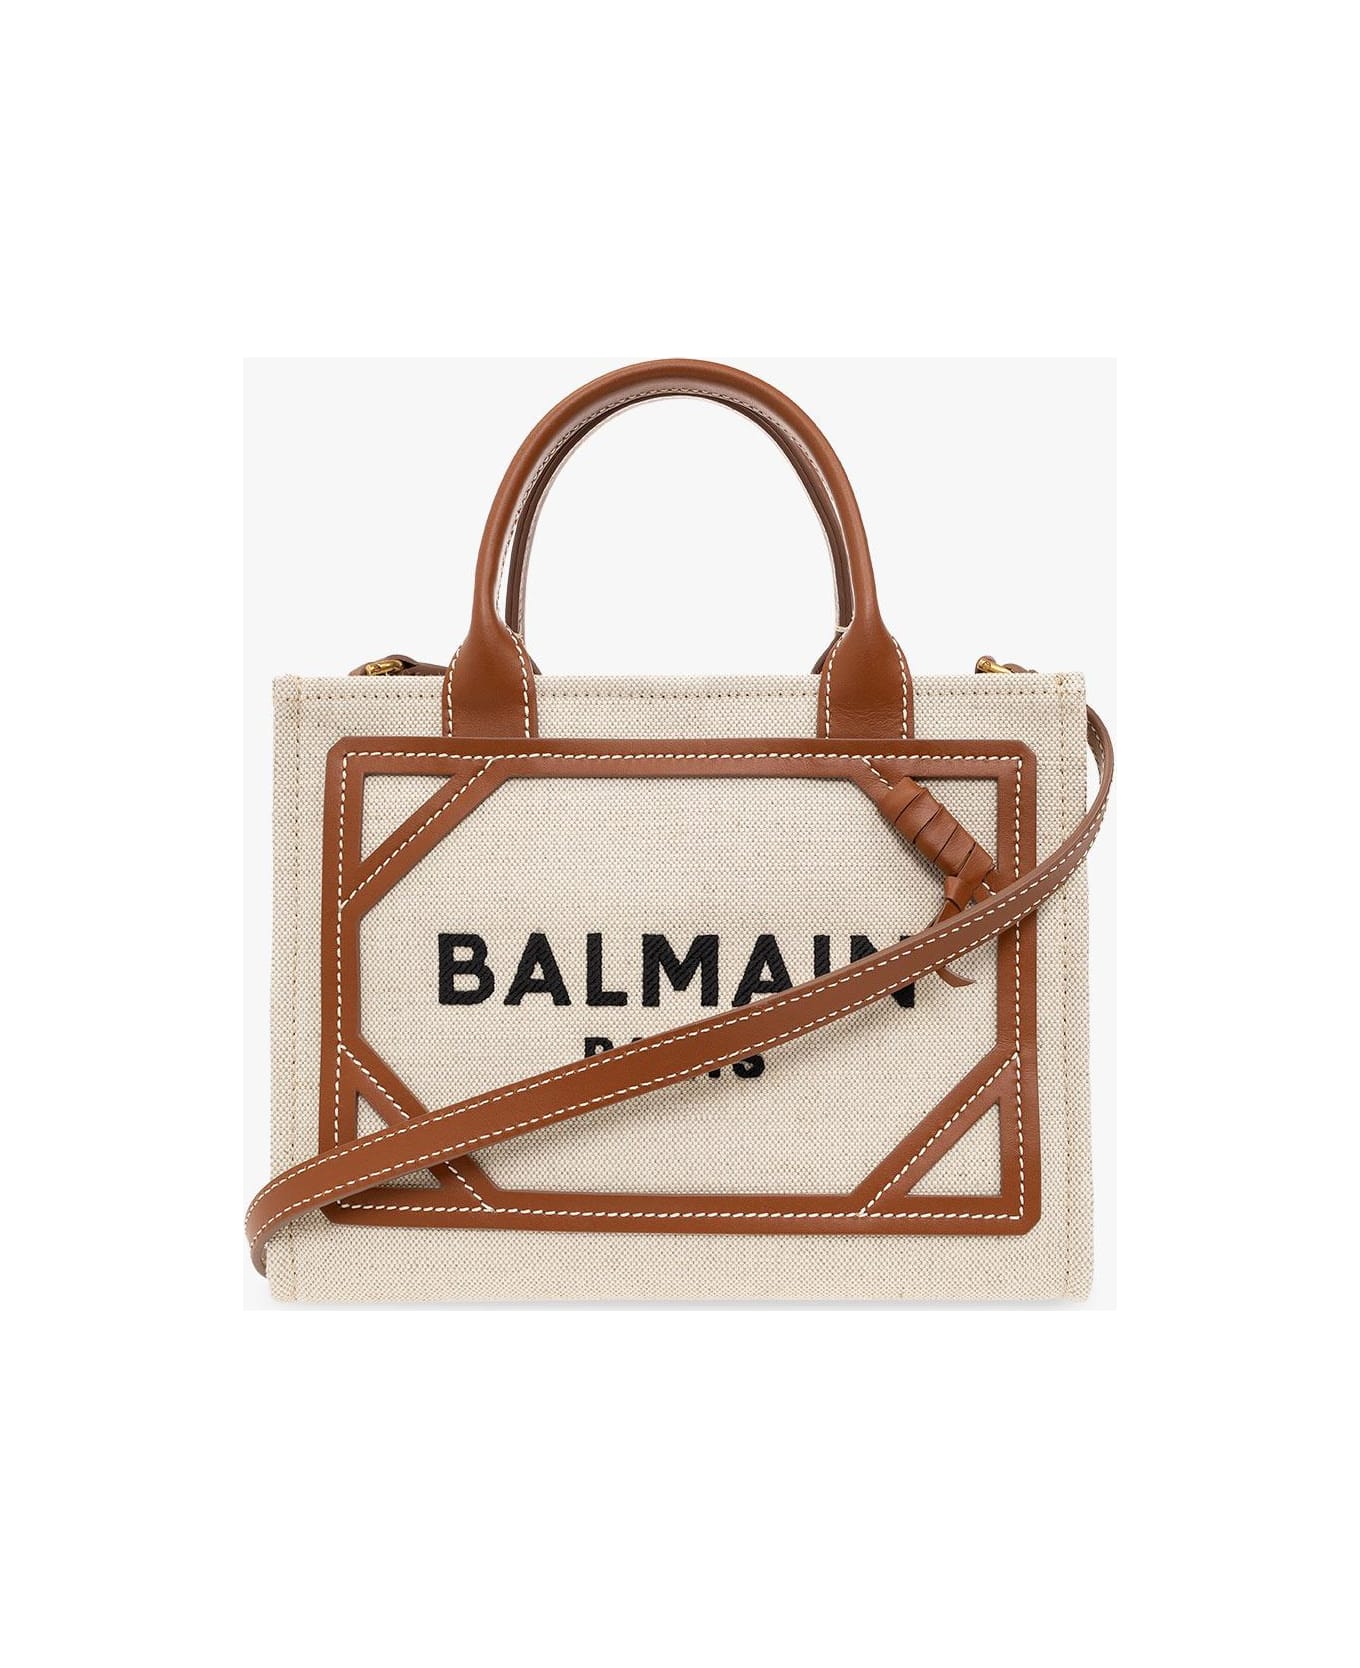 Balmain 'b-army' Shoulder Bag - Beige